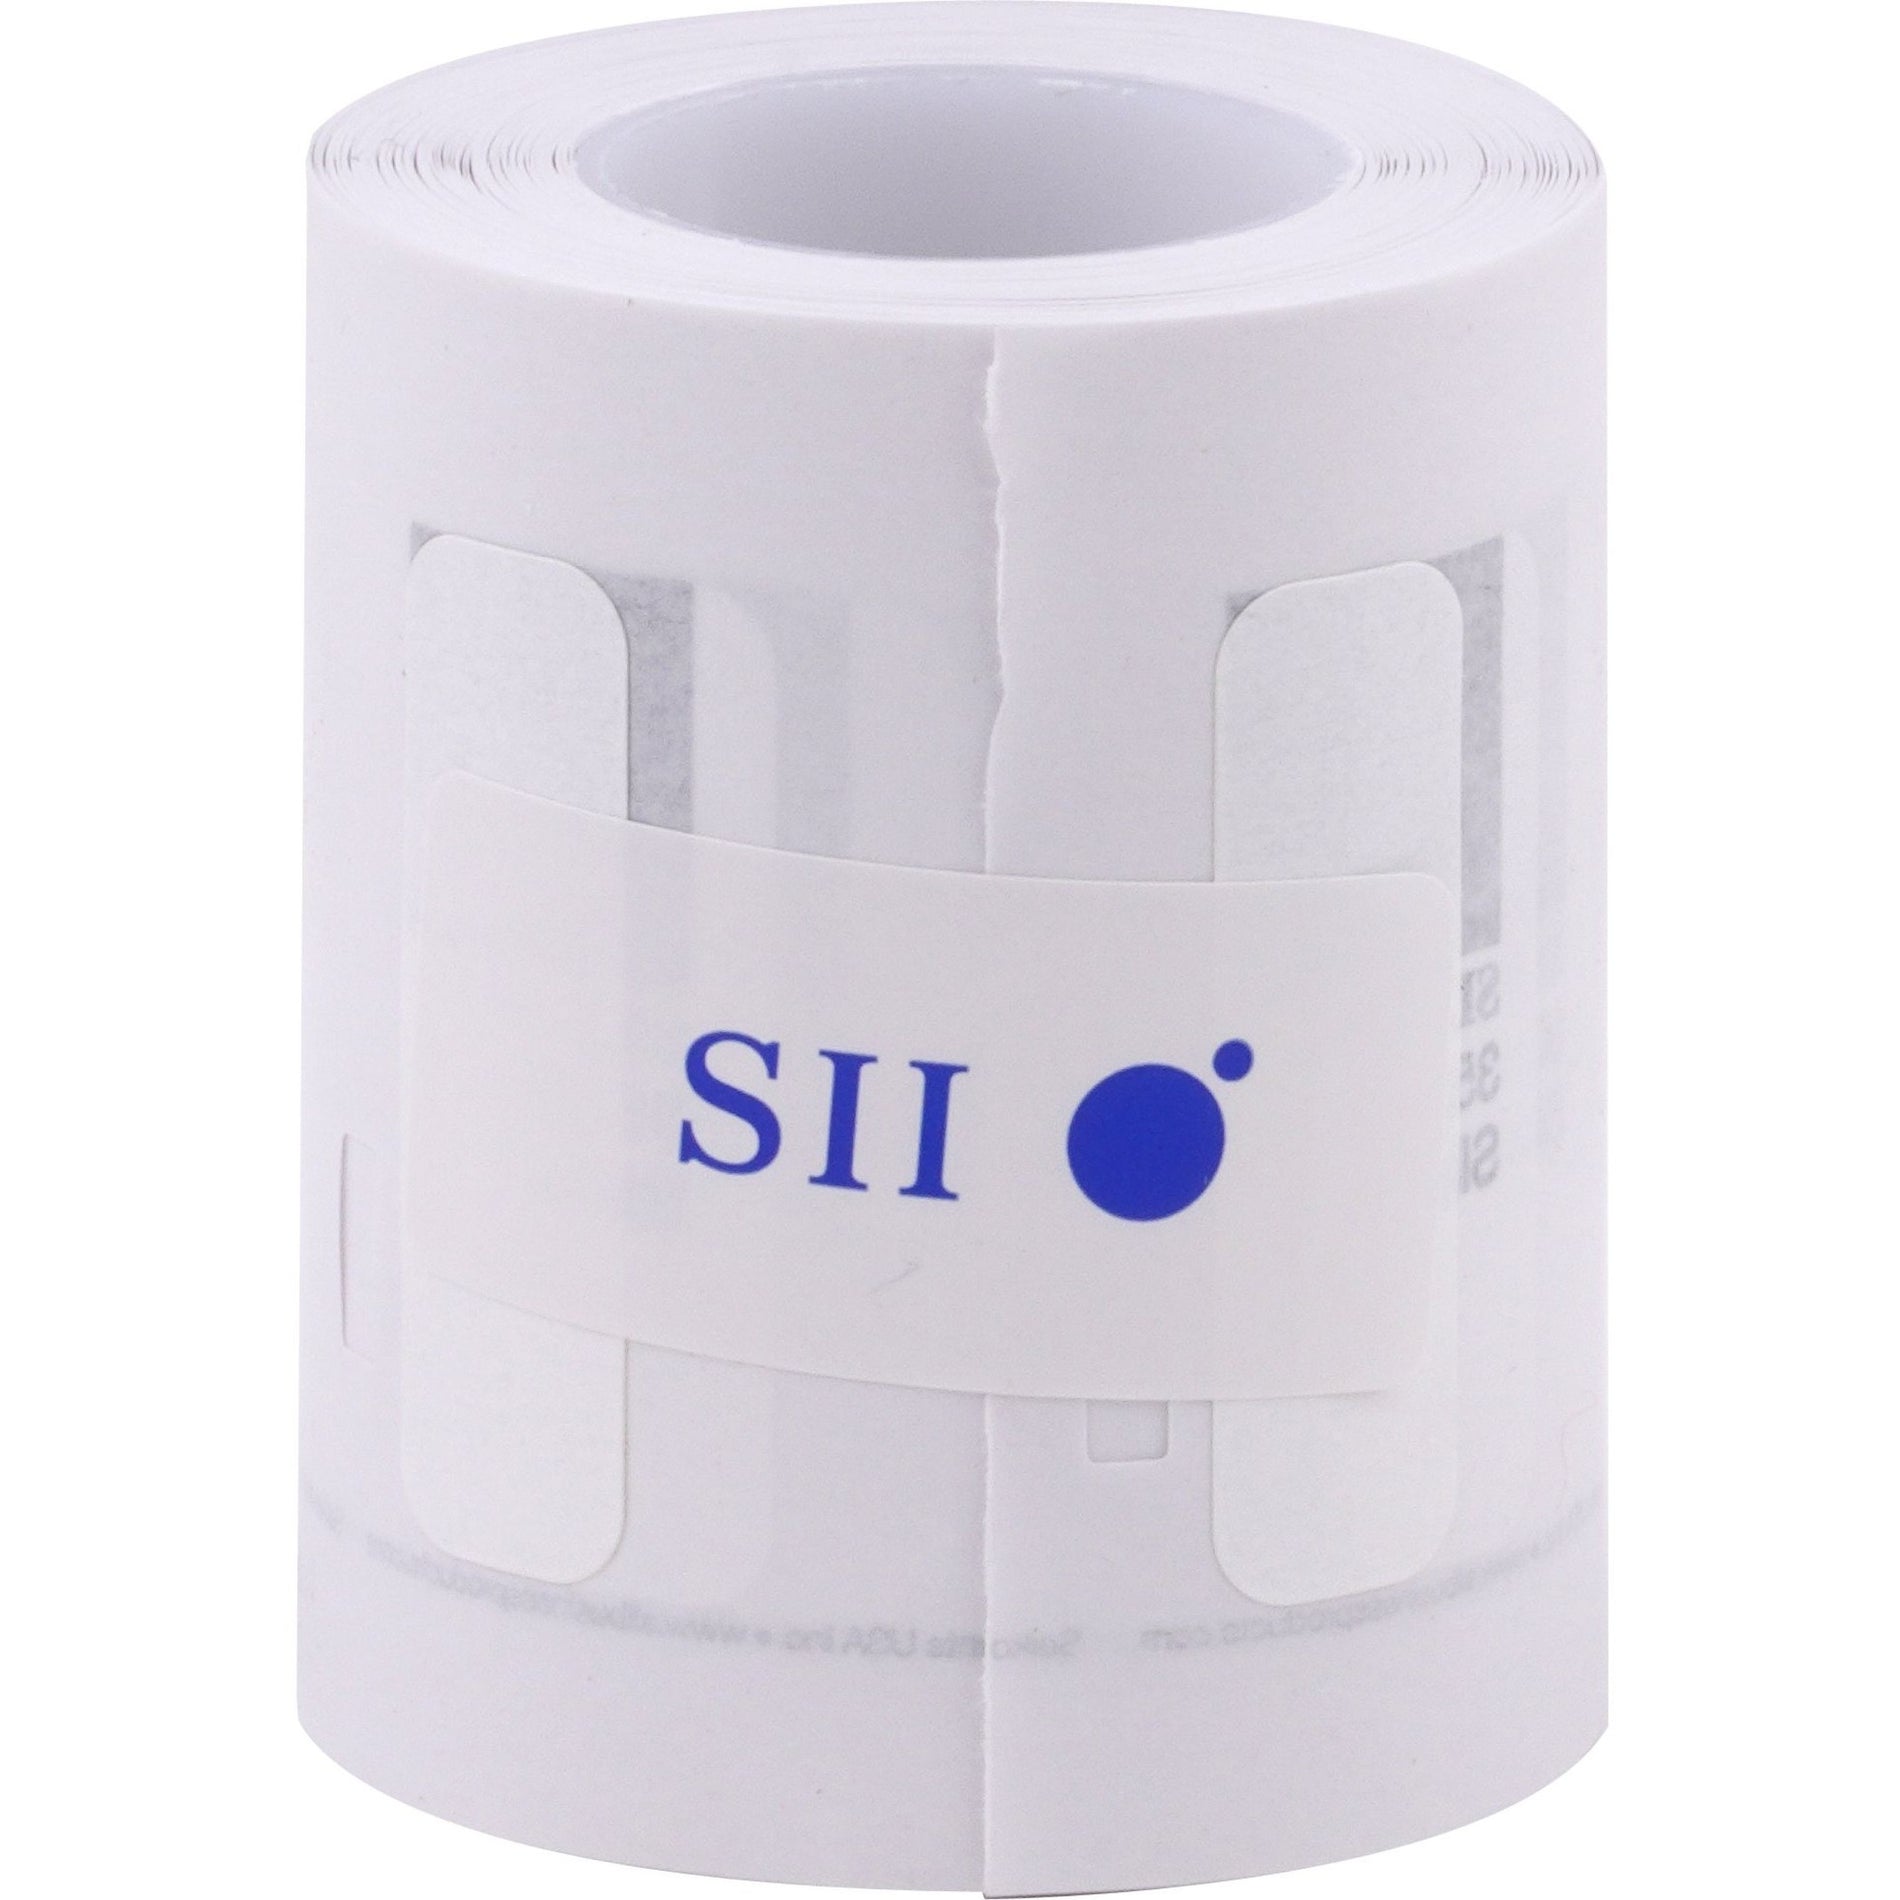 Seiko SLP-35L Slide Labels, 35mm, 7/16"x1-1/2", 300/BX, White